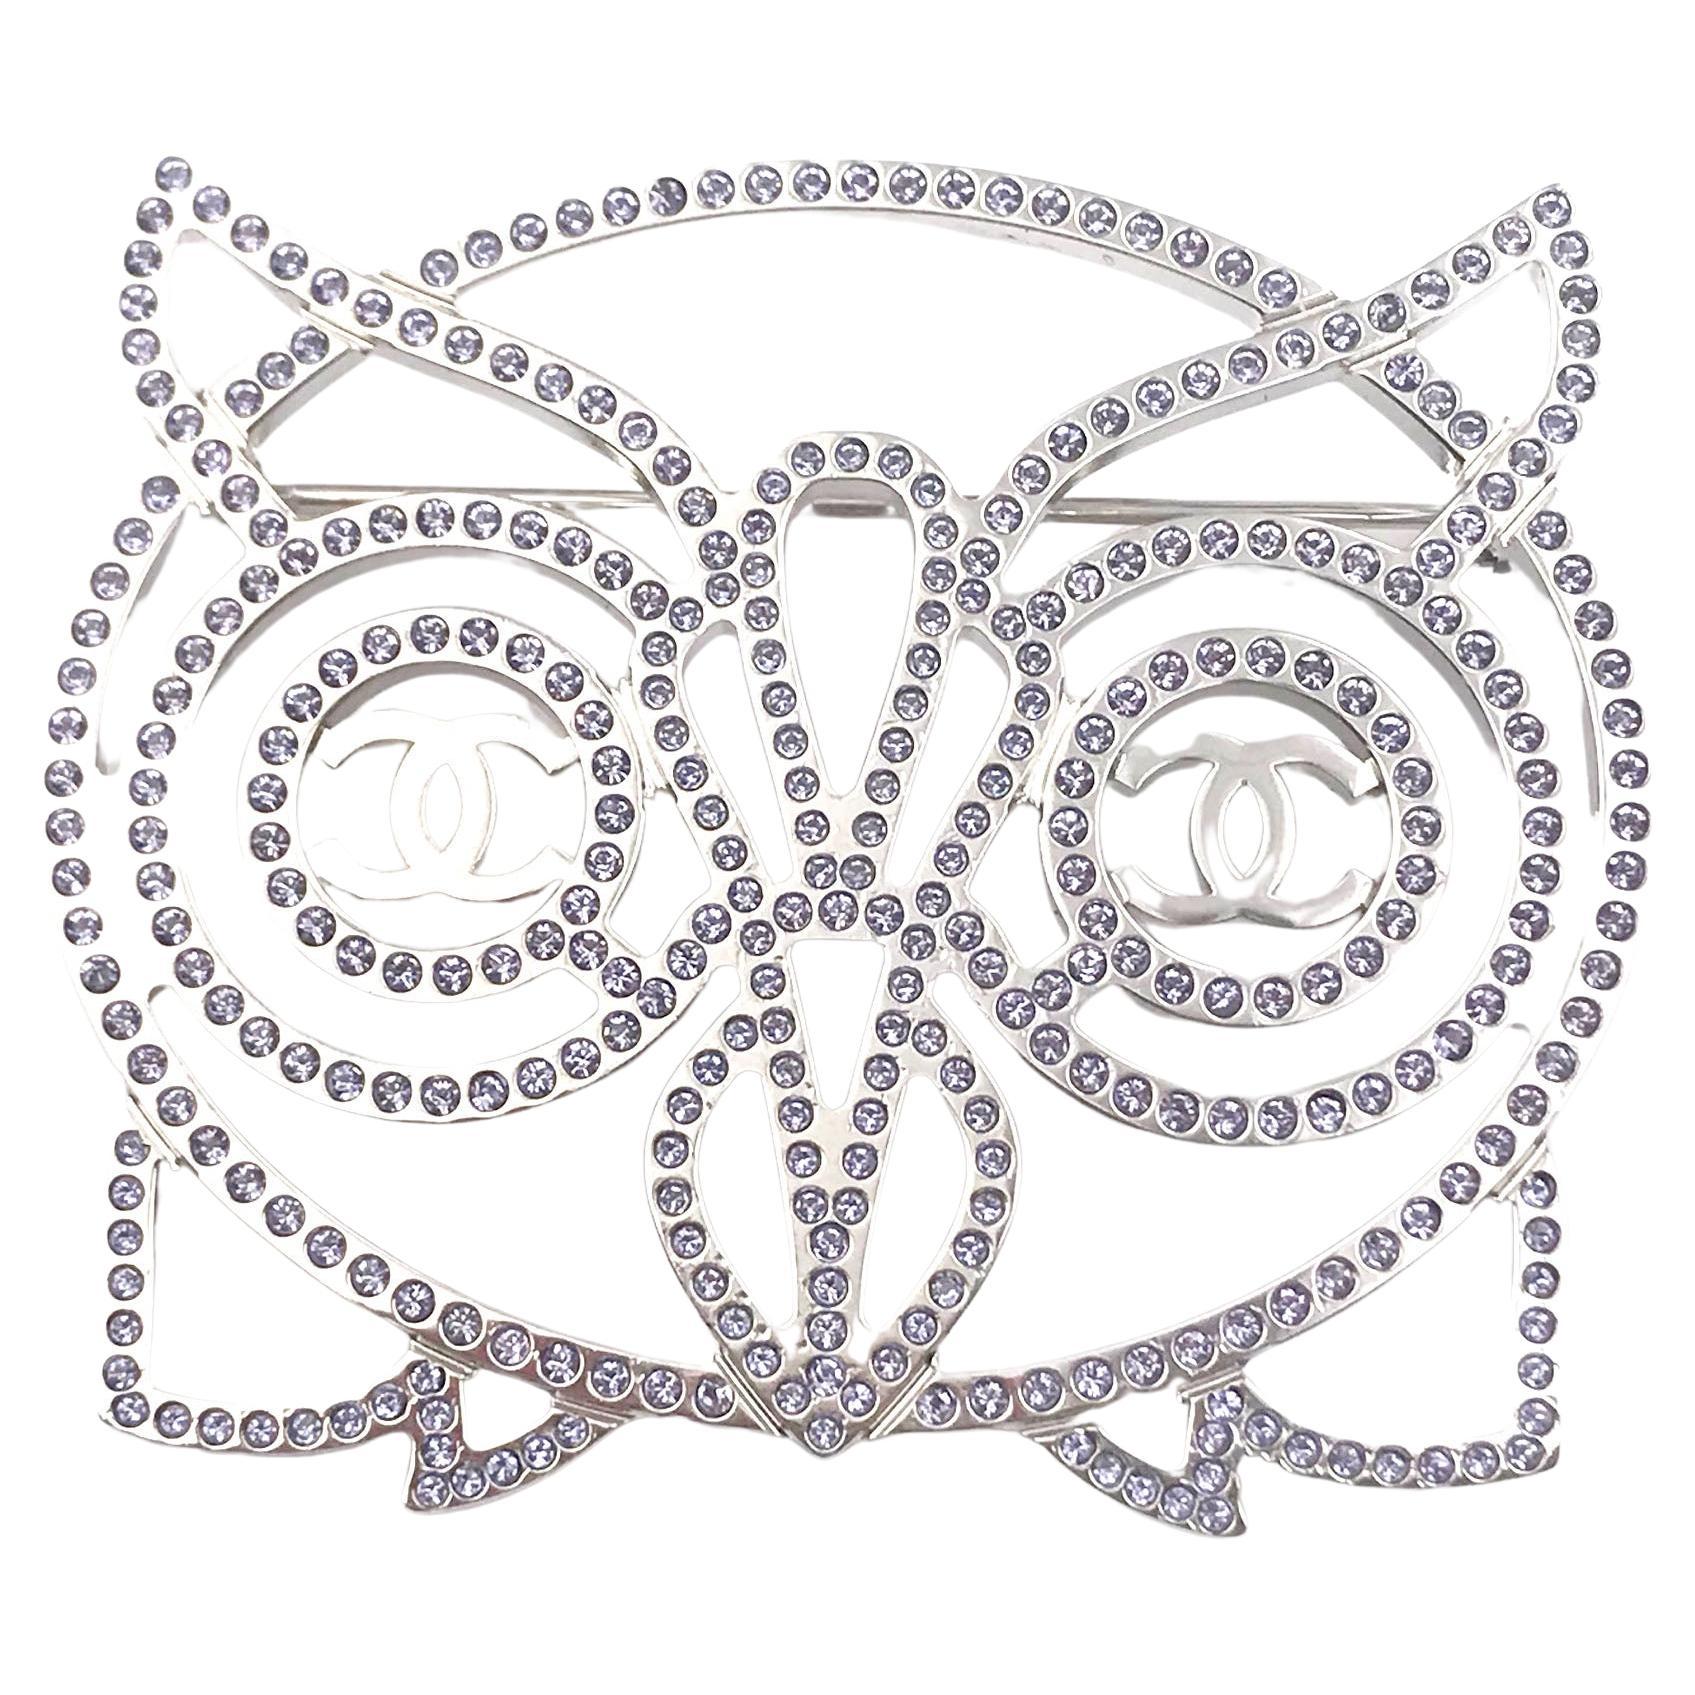 Chanel Brand New Silver Owl Light Lavender Crystal Brooch